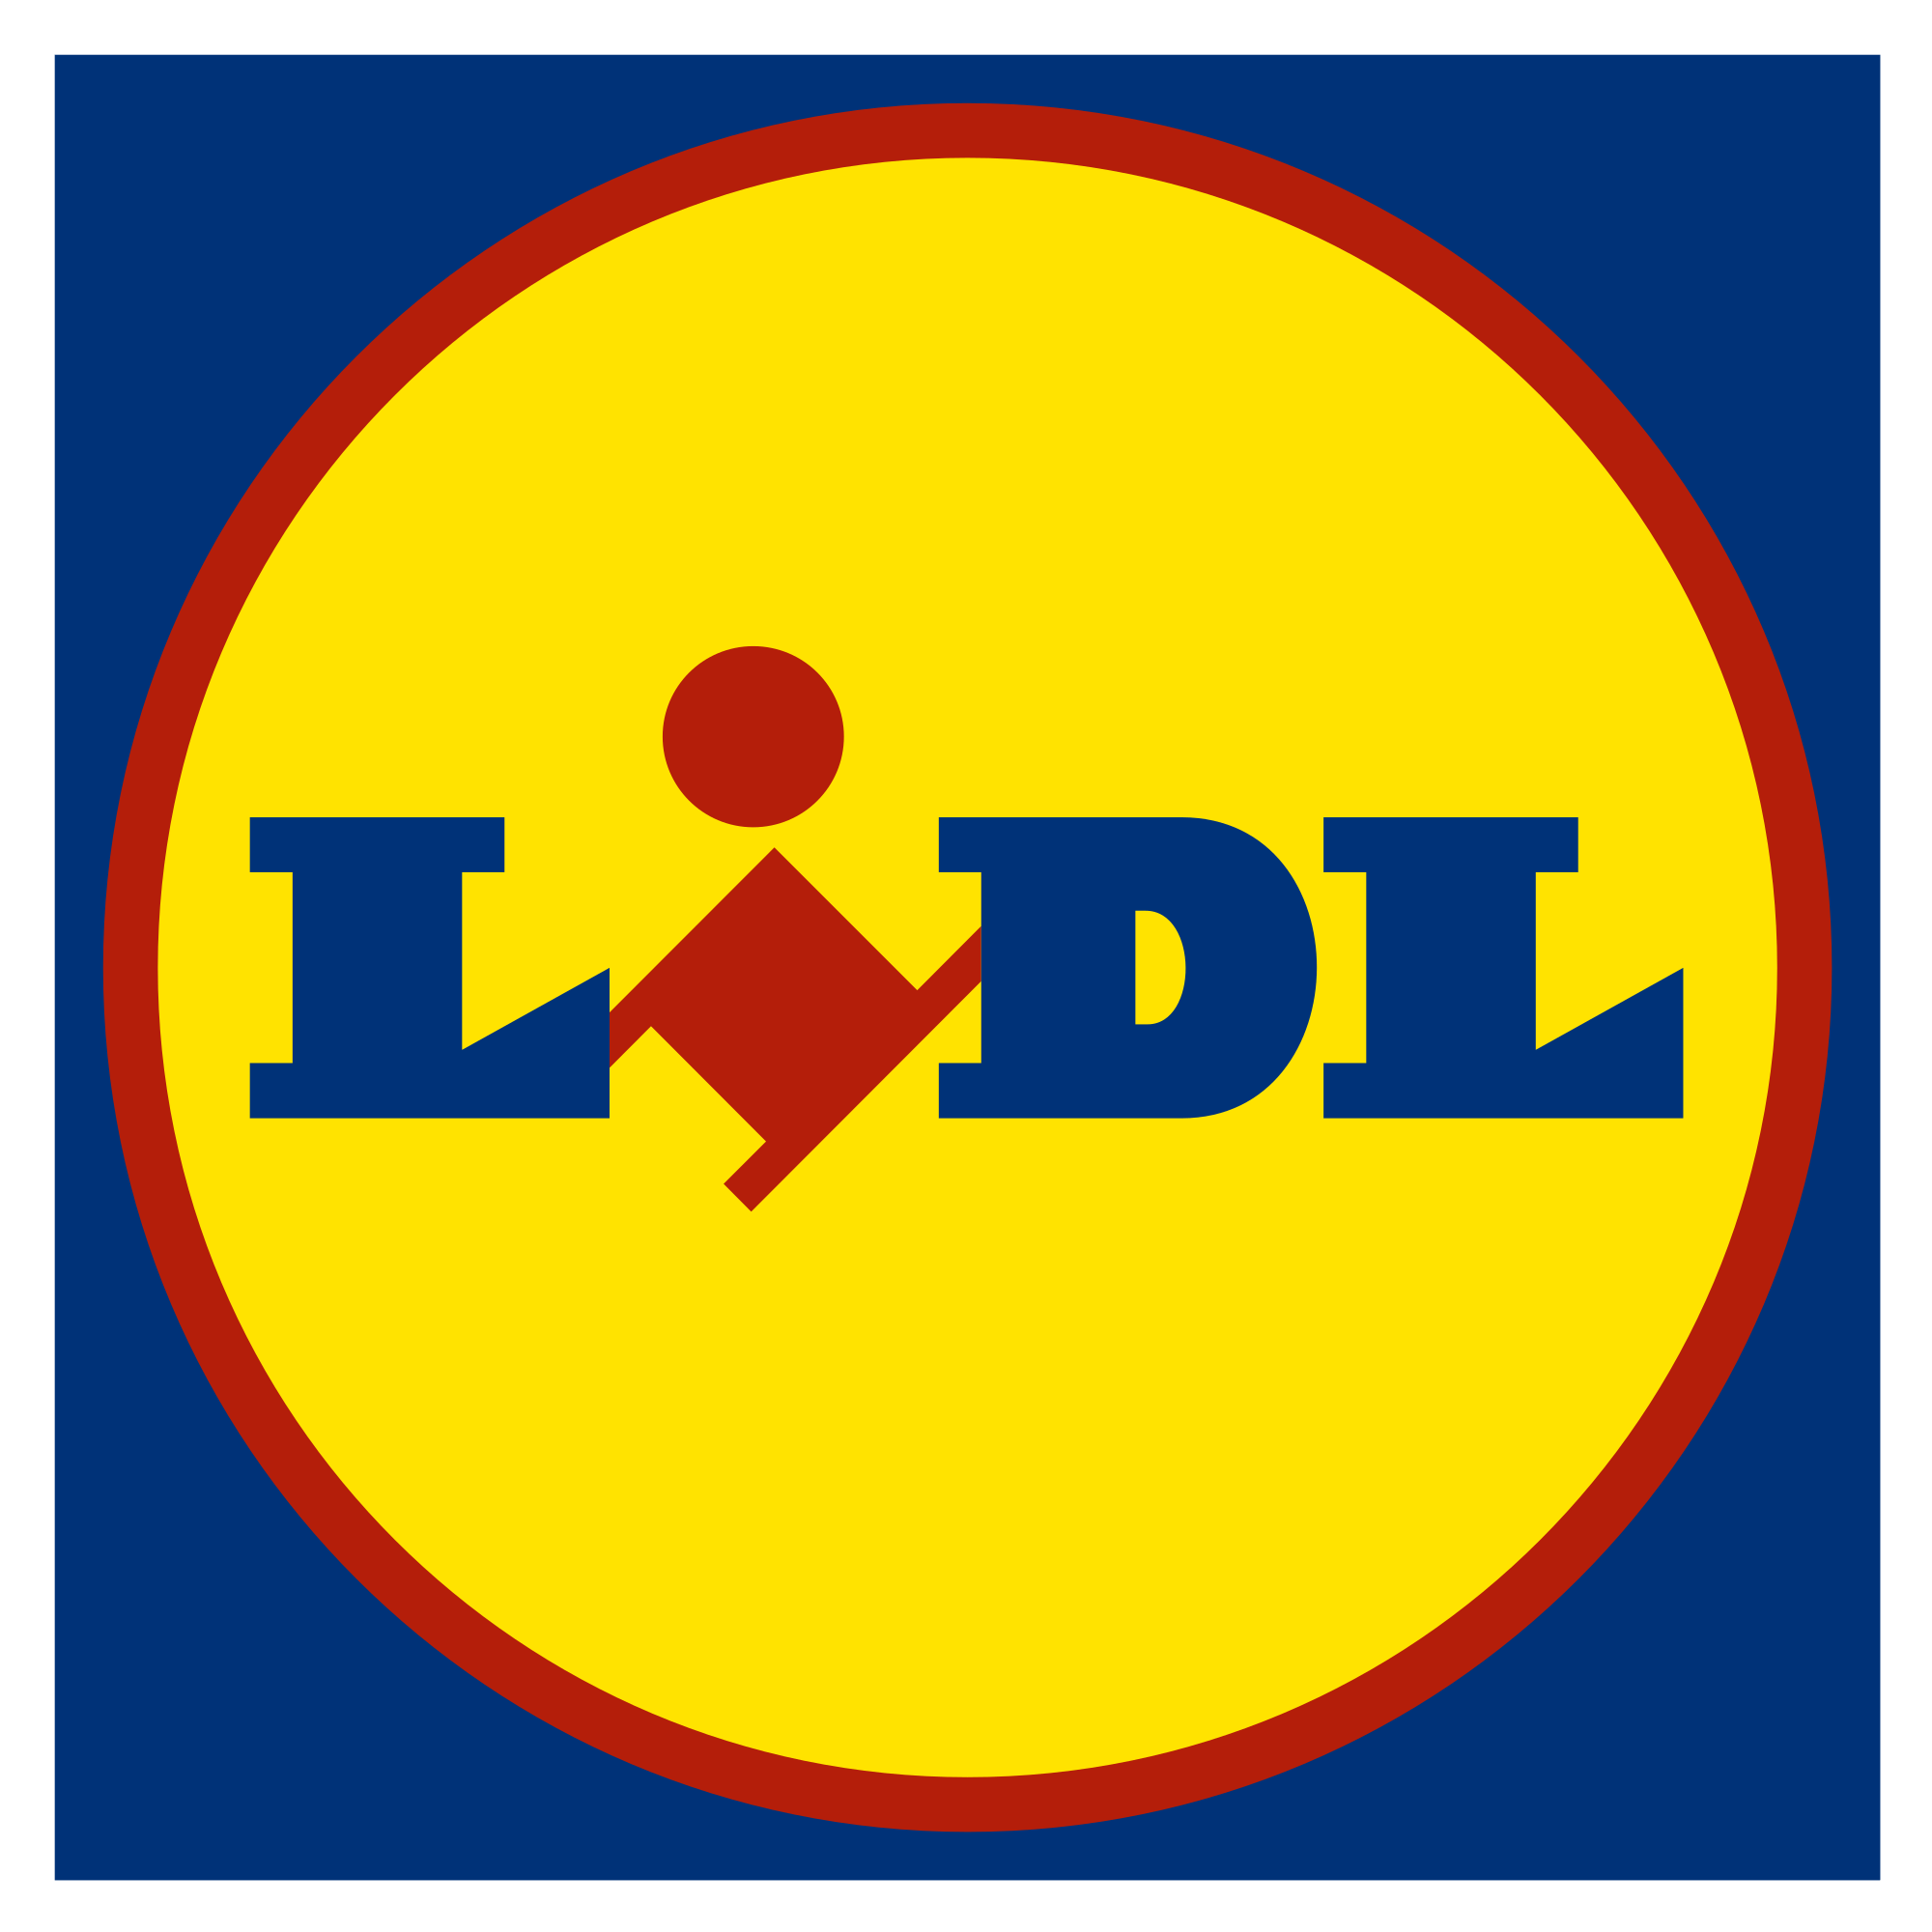 Yellow and Orange Circle Logo - File:Lidl-Logo.svg - Wikimedia Commons